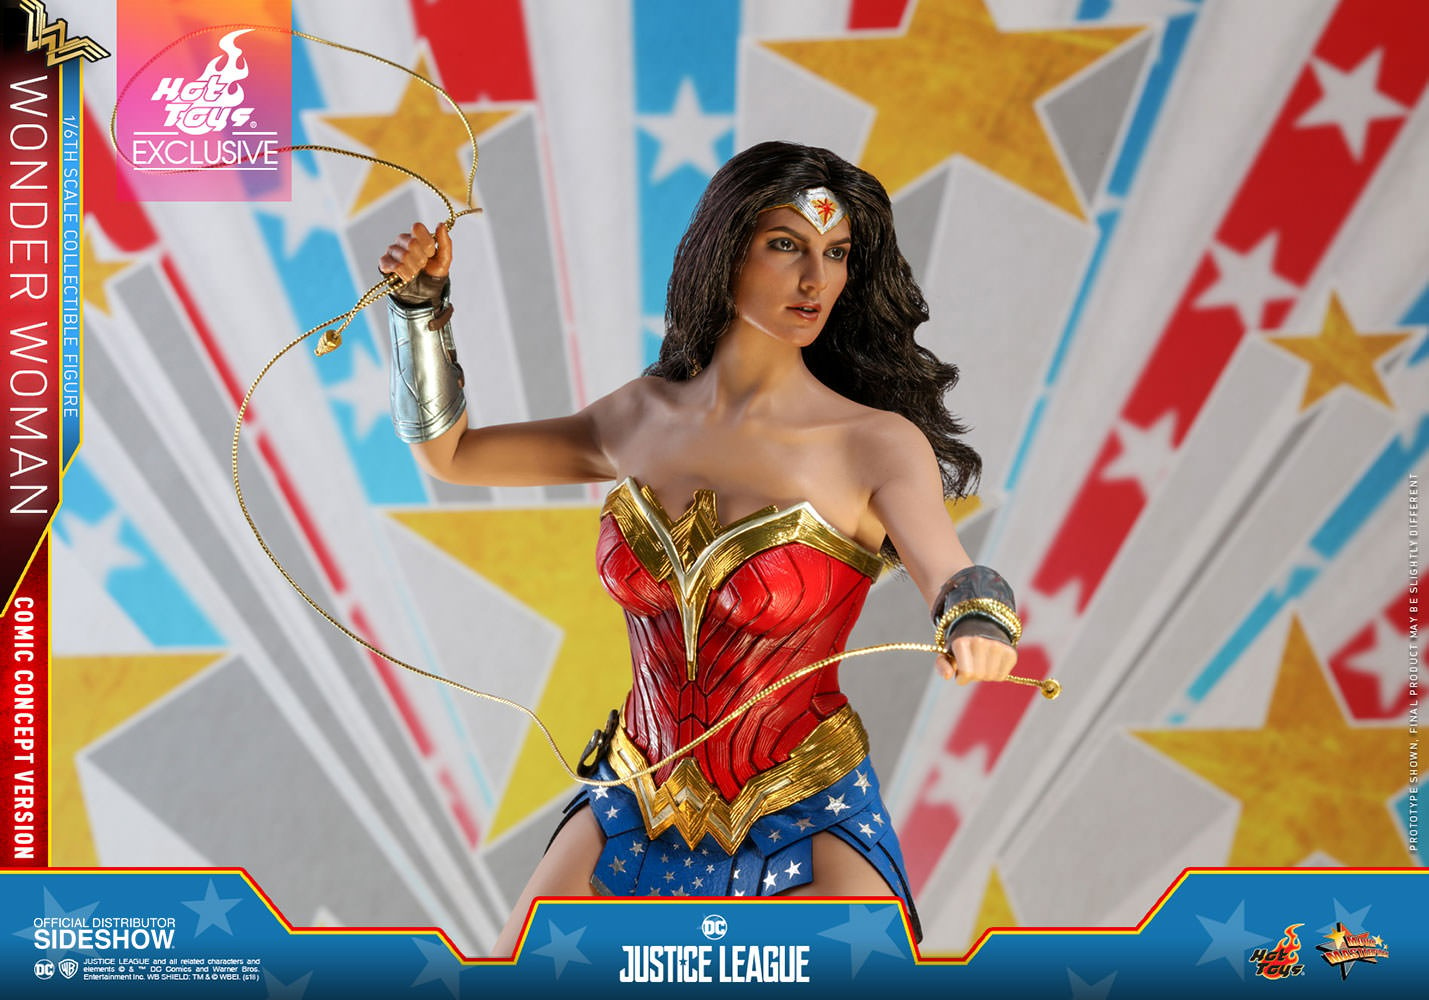 Wonder Woman Comic Concept Version Exclusive Edition (Prototype Shown) View 6